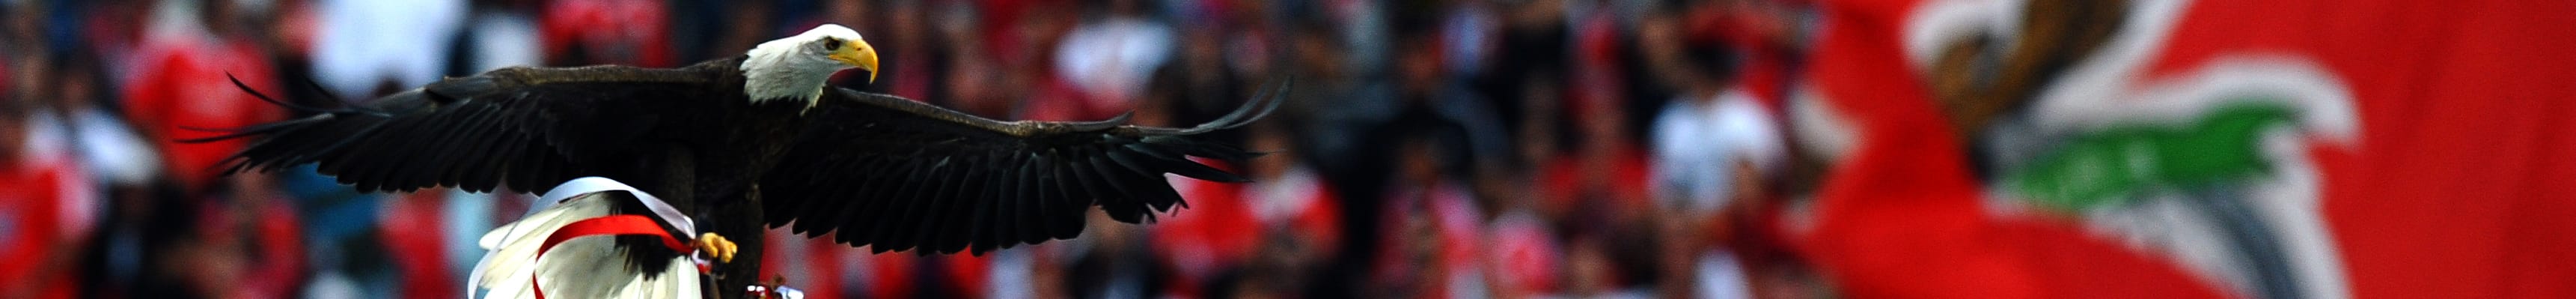 Benfica-Eintracht, quale aquila volerà più in alto?